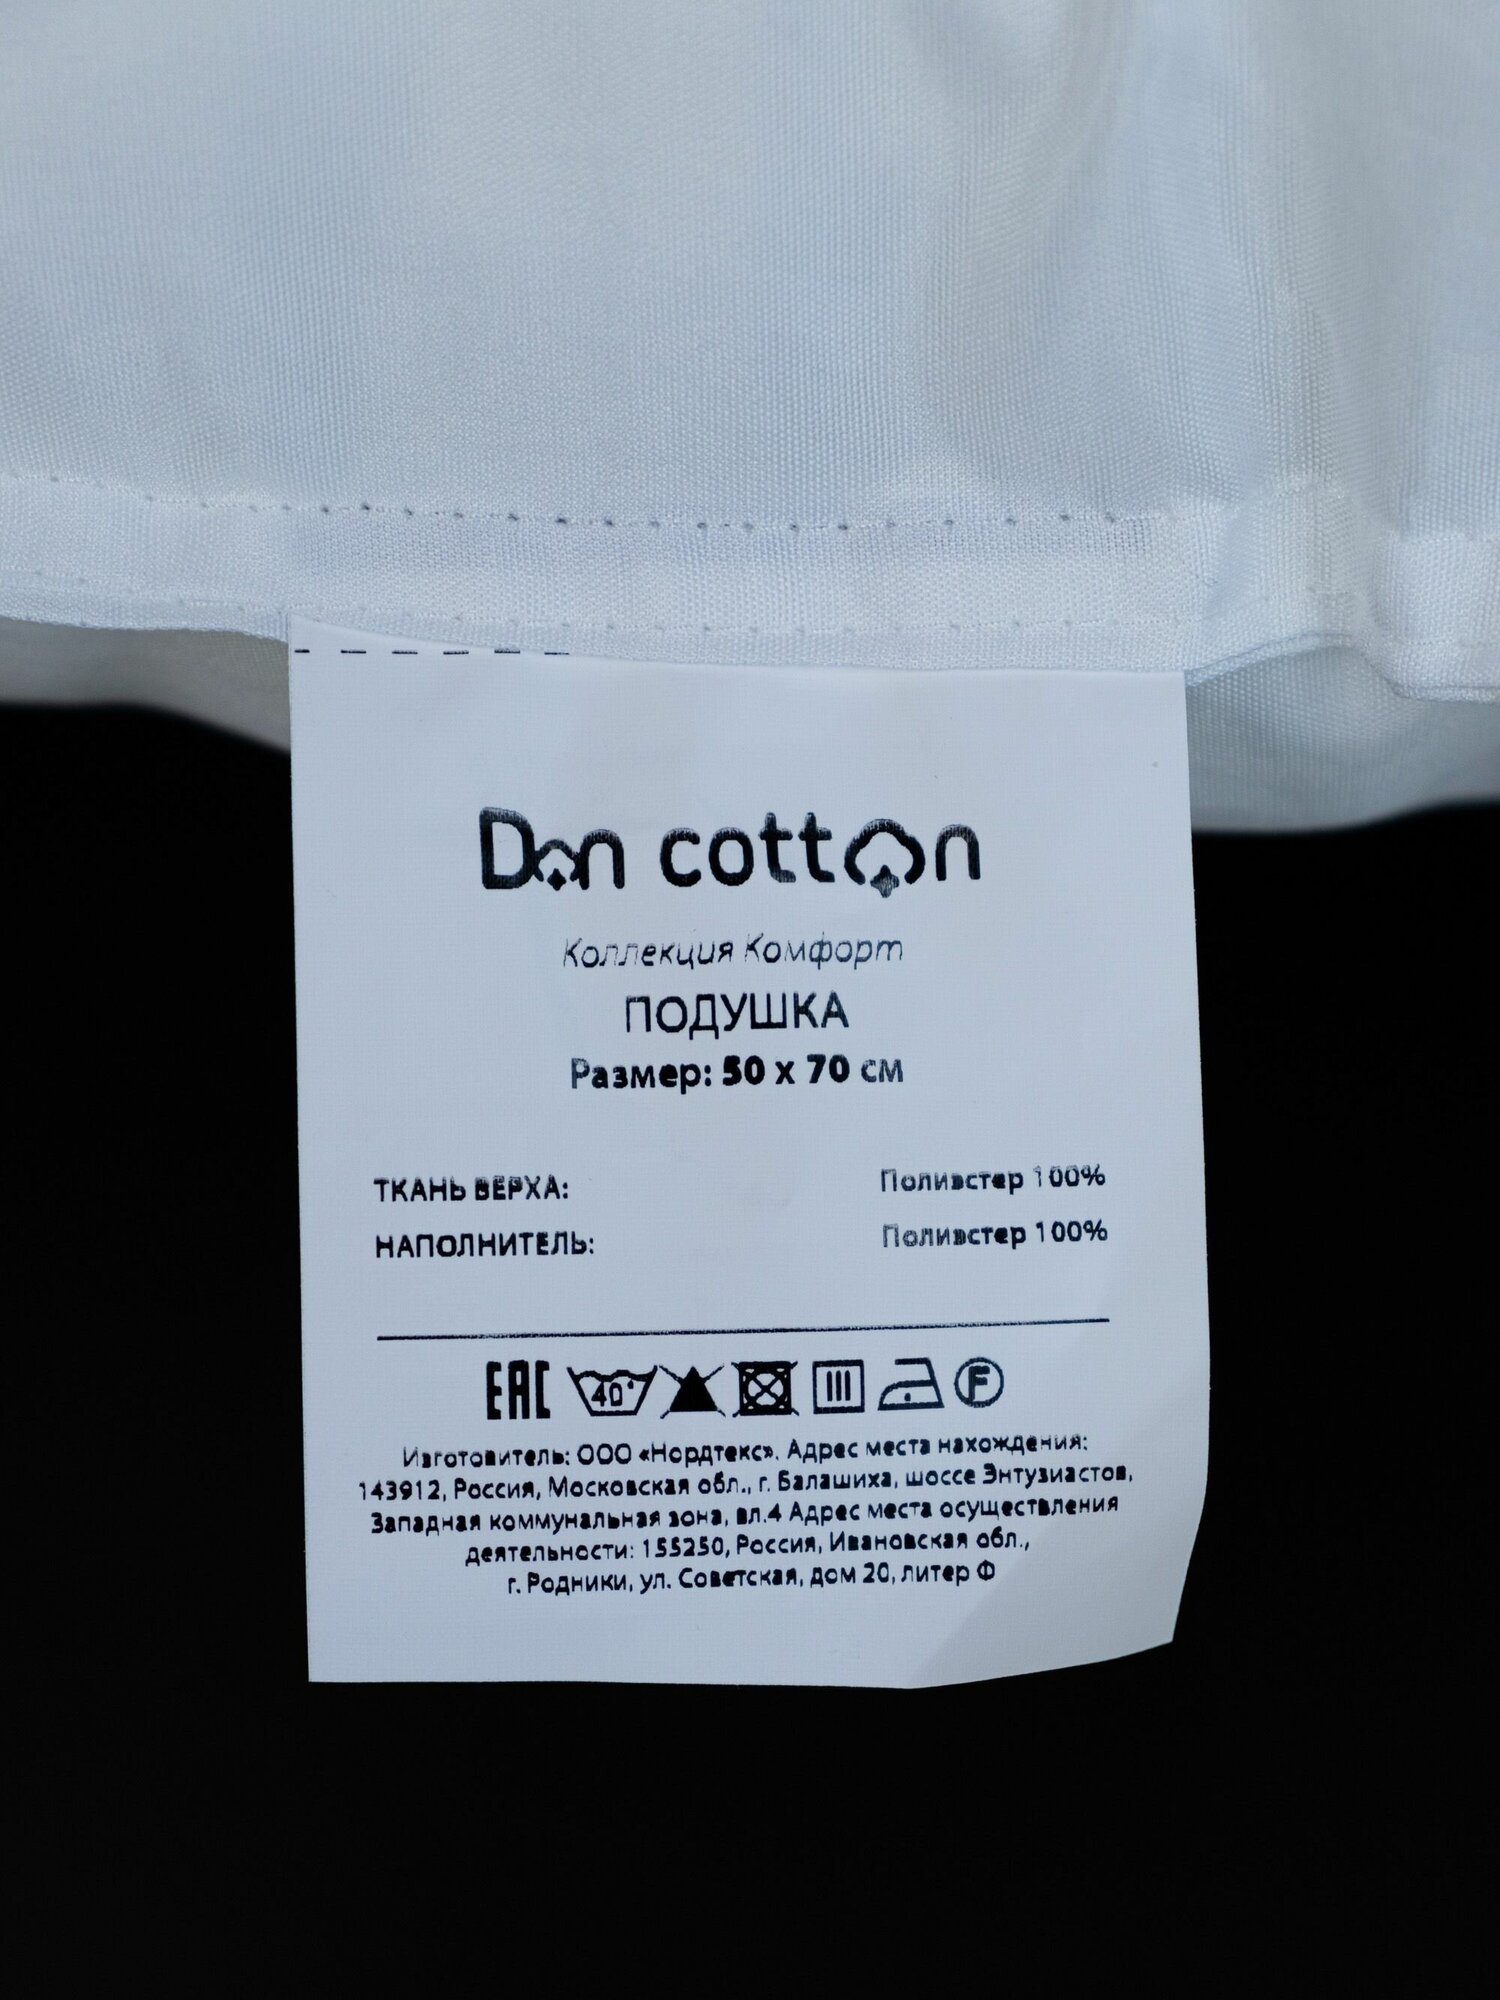 Подушка DonCotton "Самая мягкая цена" (50x70) - фотография № 5